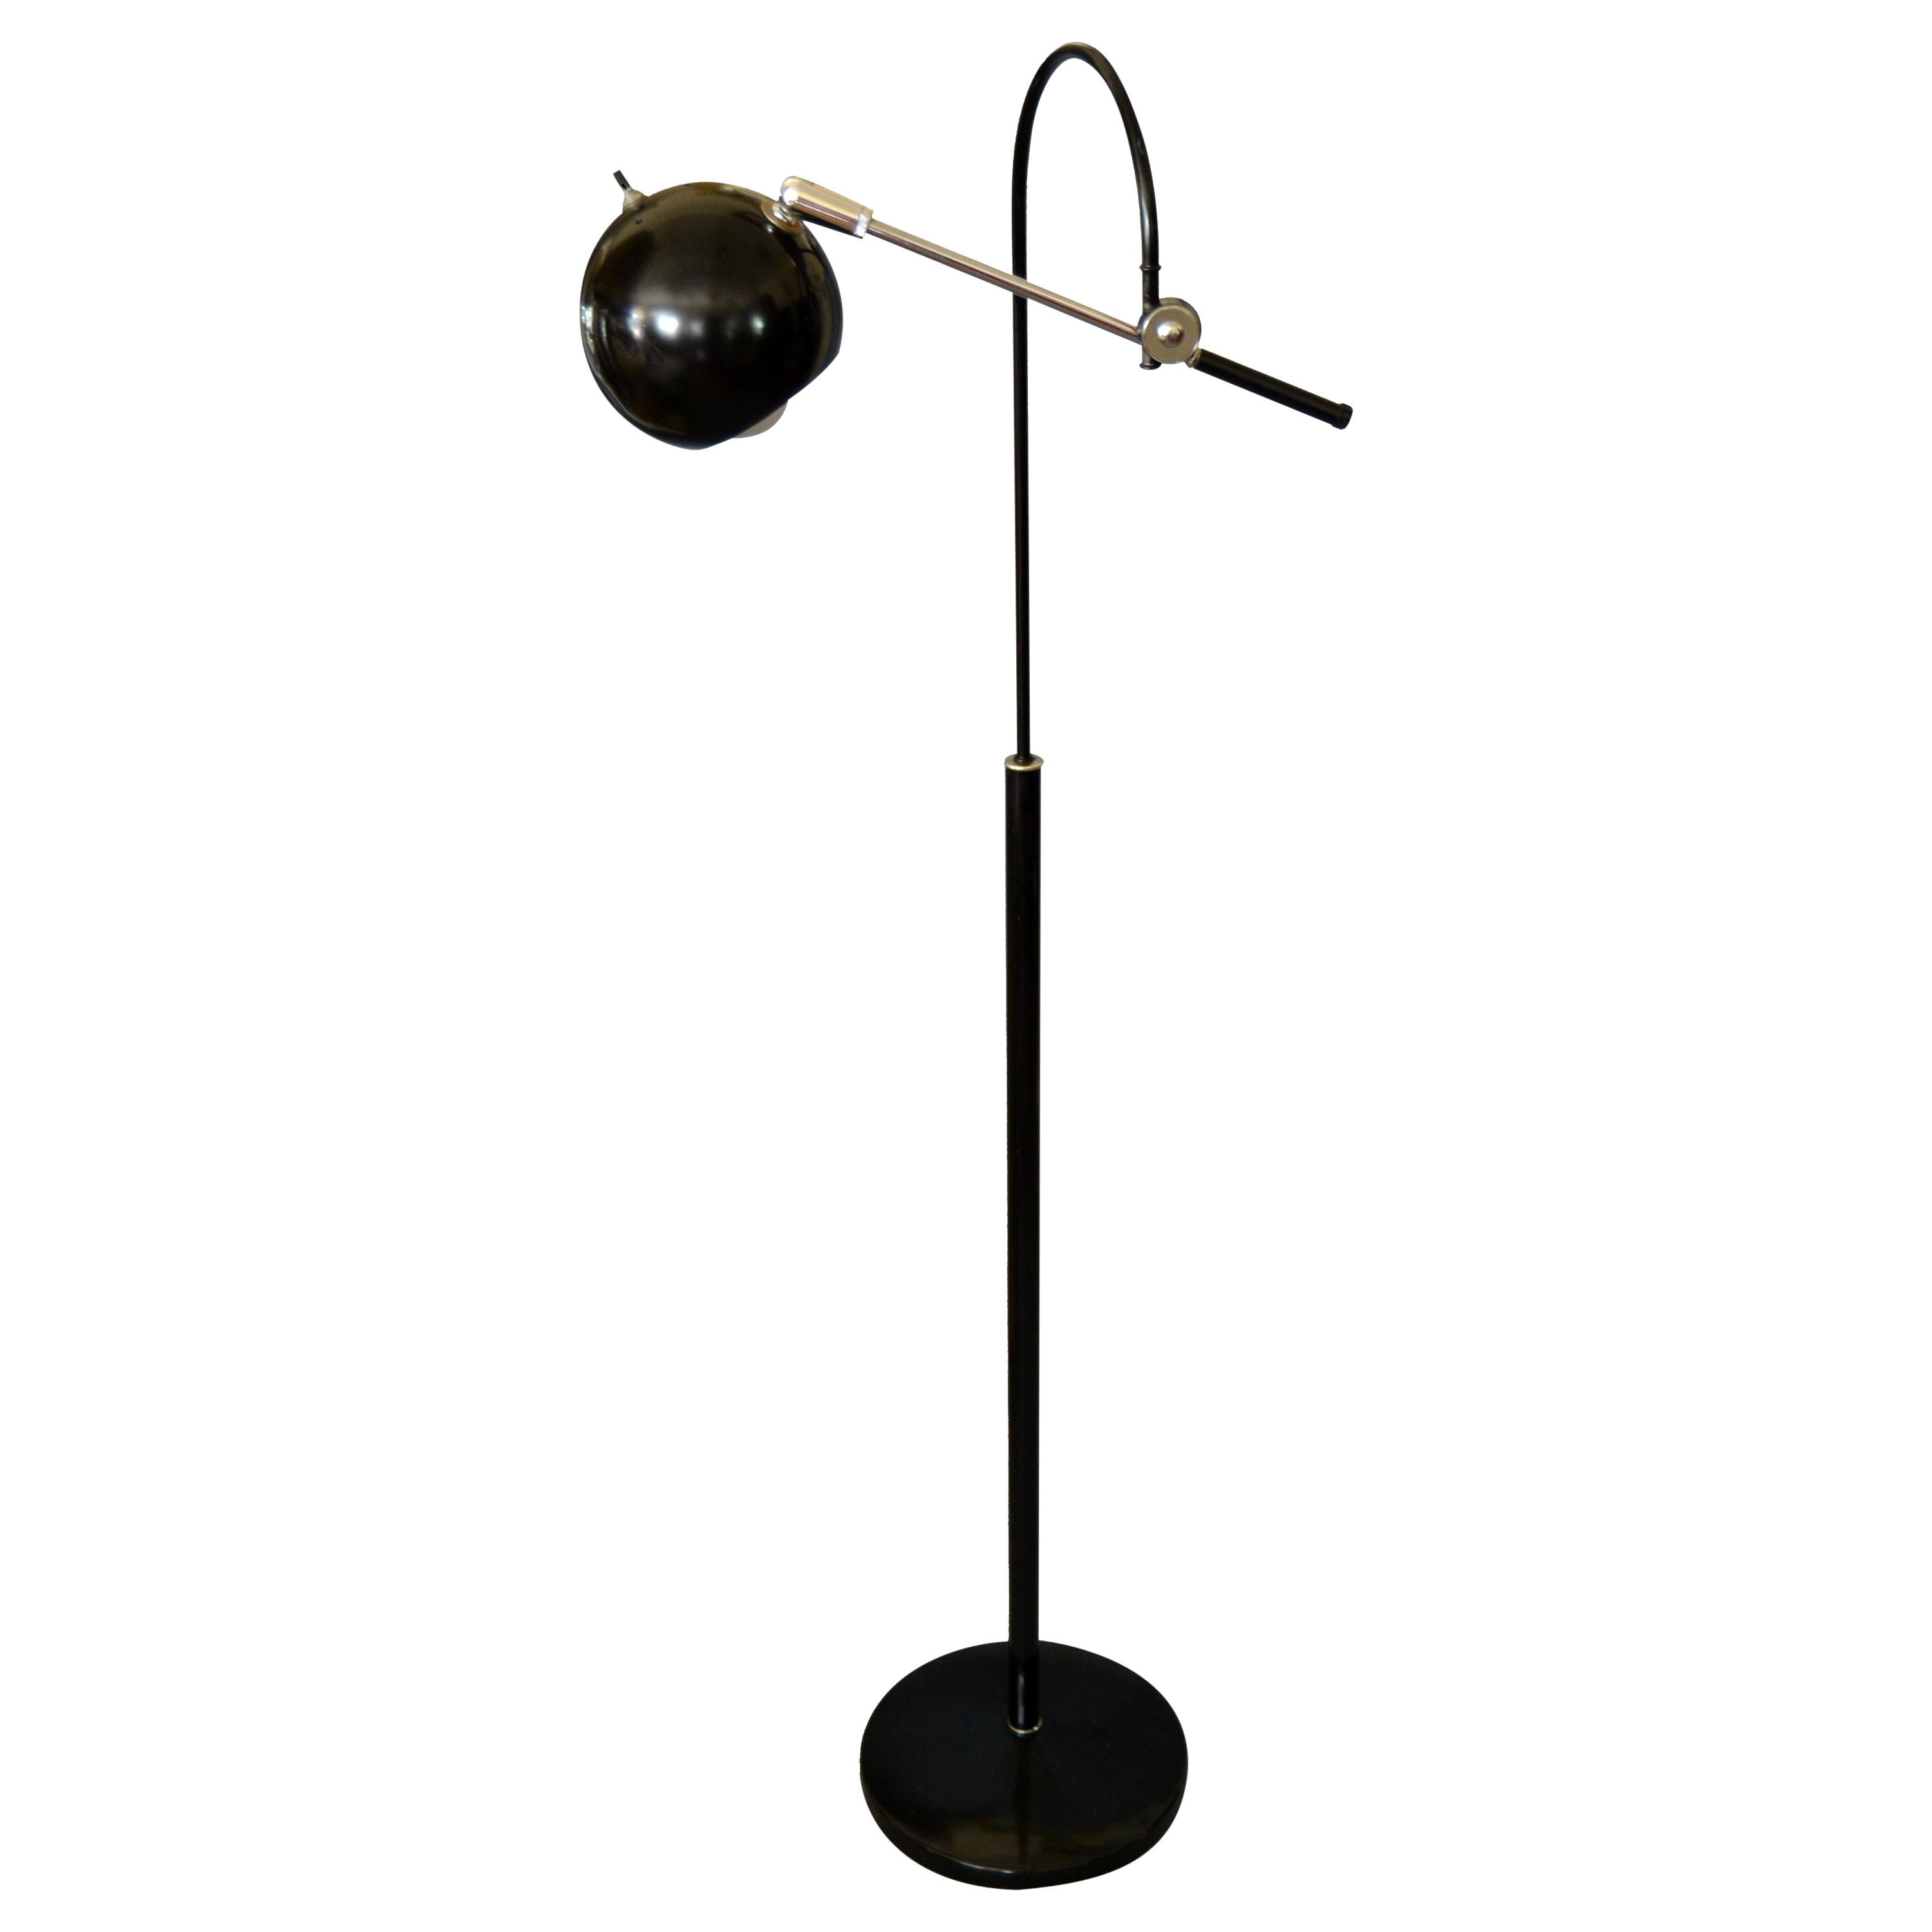 Mid-Century Modern Black Metal Floor Lamp with Adjustable Arm & Round Ball Shade